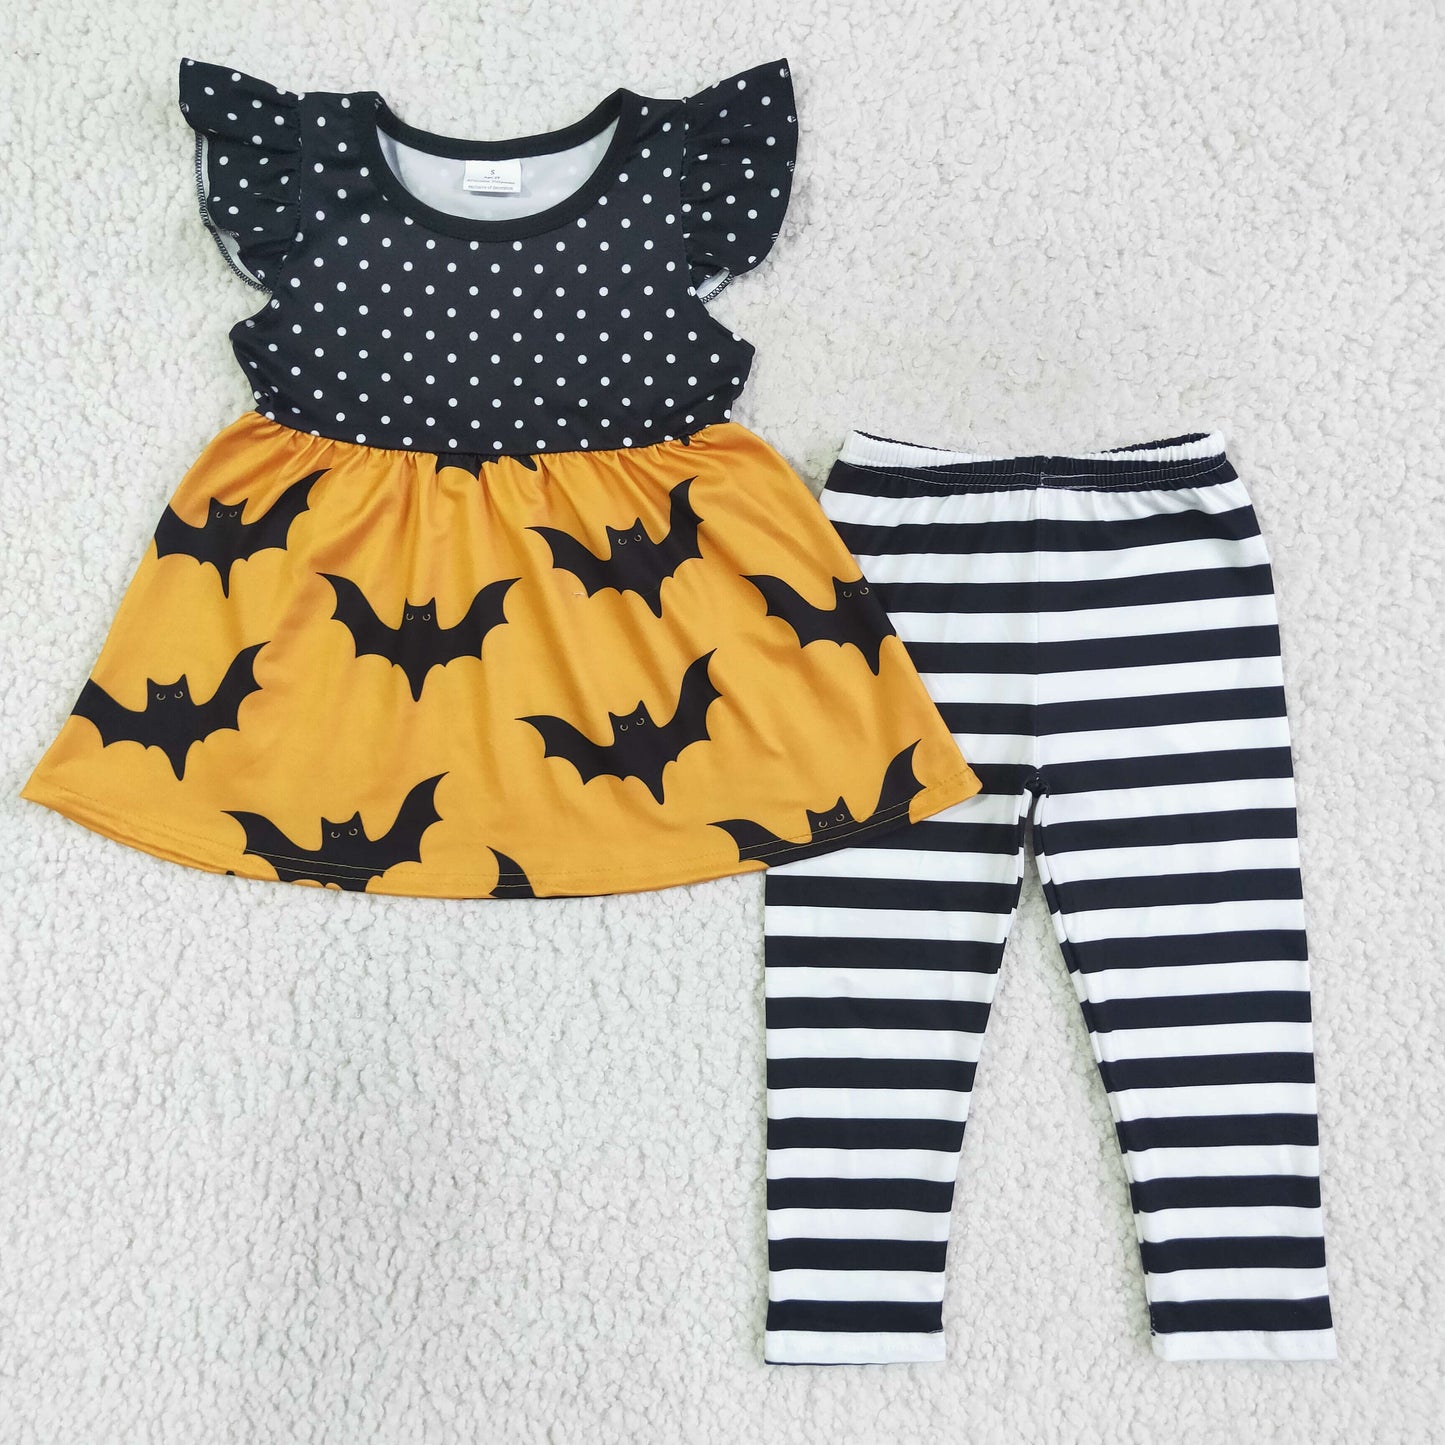 Bat tunic stripe leggings girls Halloween outfits